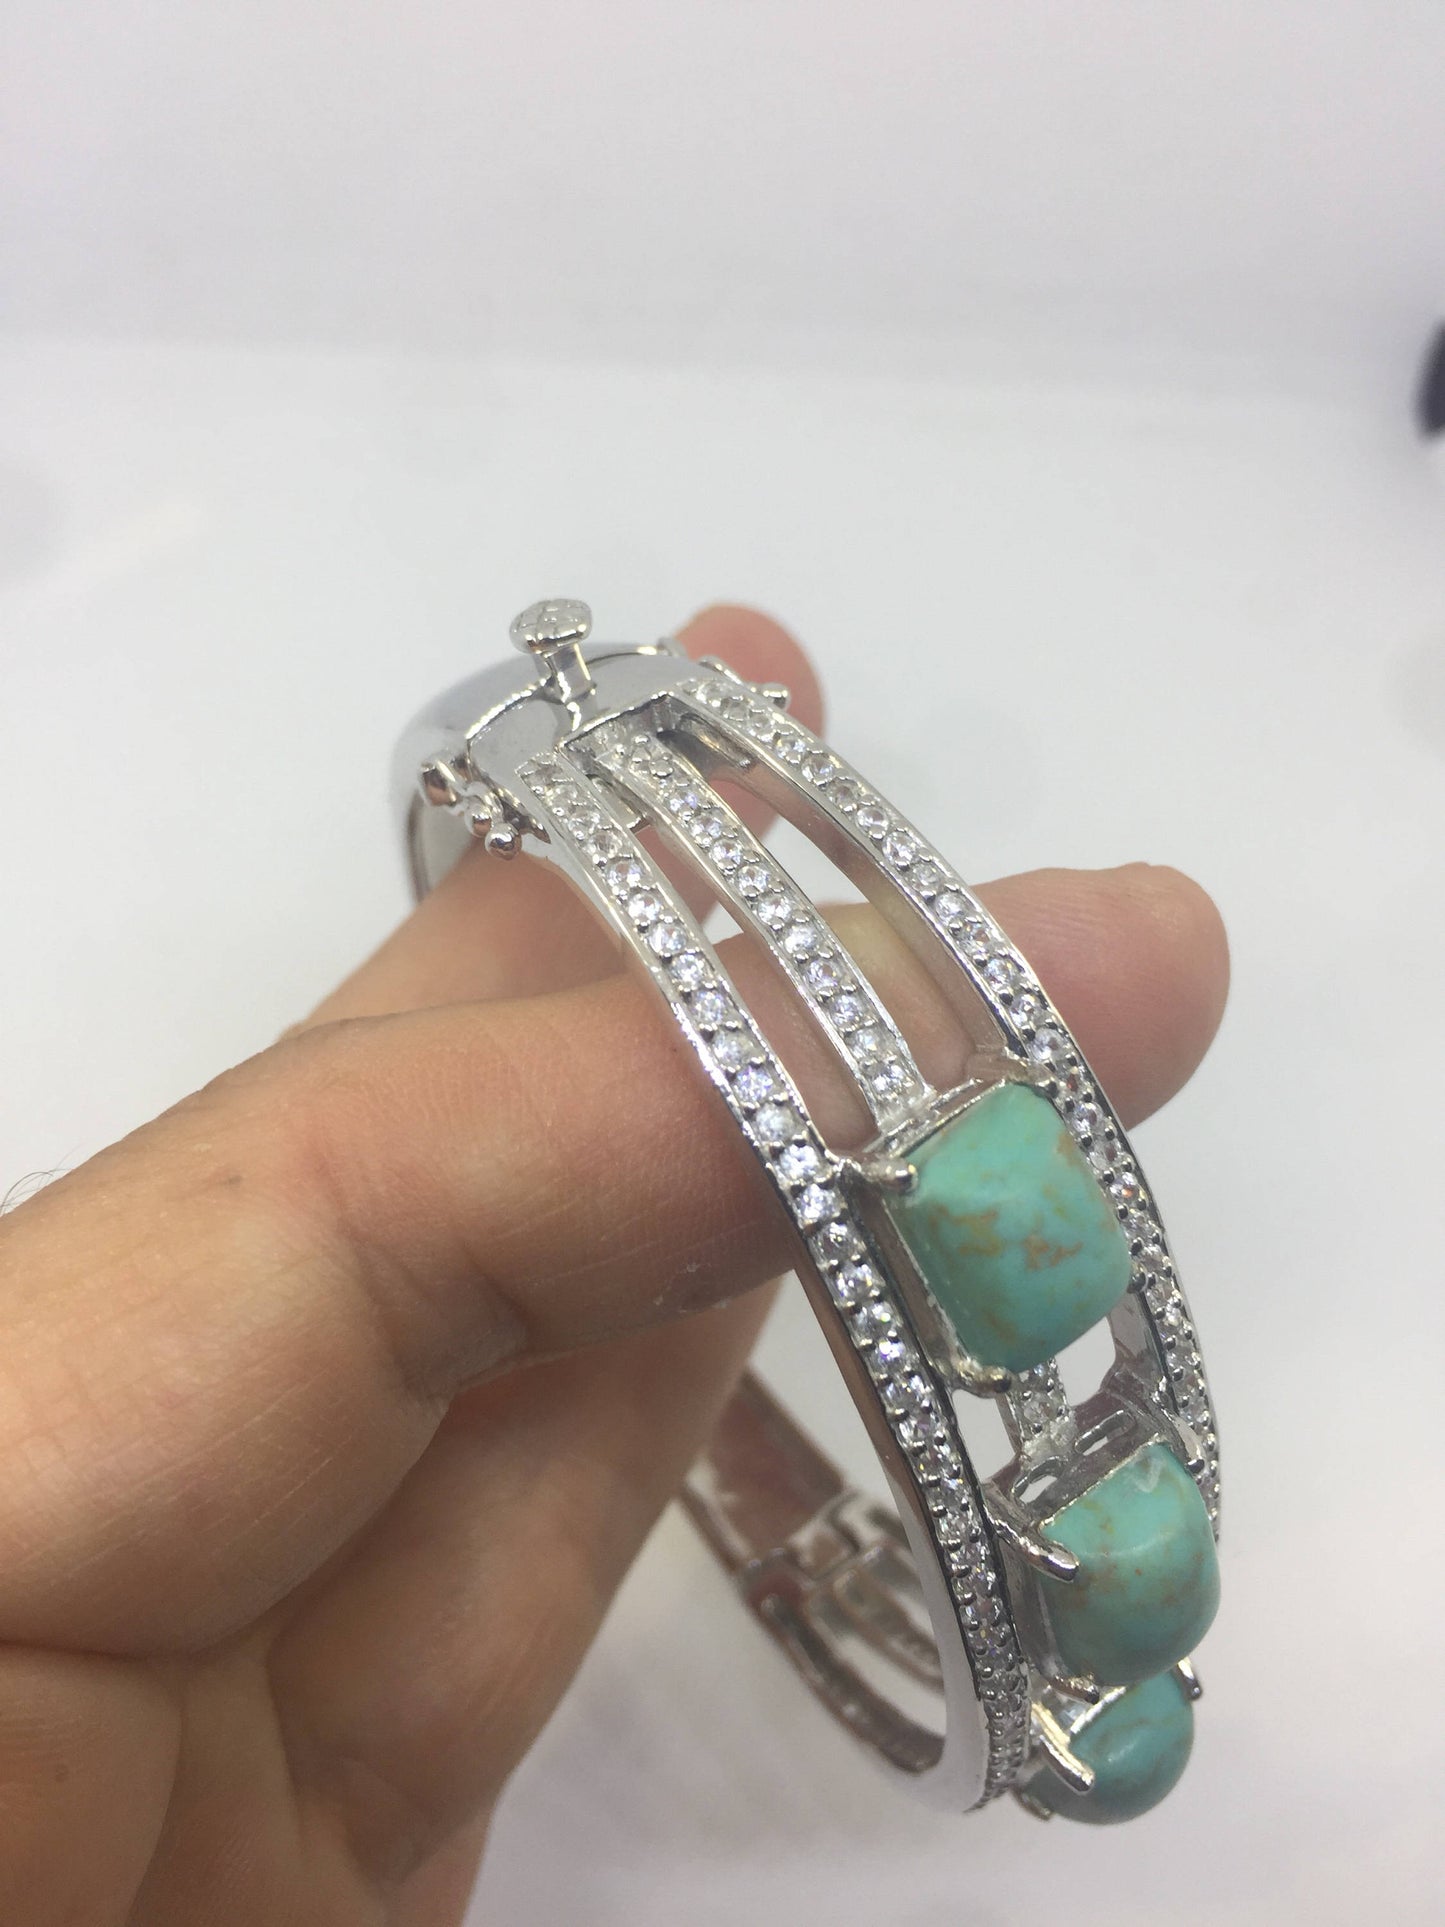 Vintage Victorian 925 Sterling Silver Filigree Persian Turquoise Crystal Bangle Bracelet